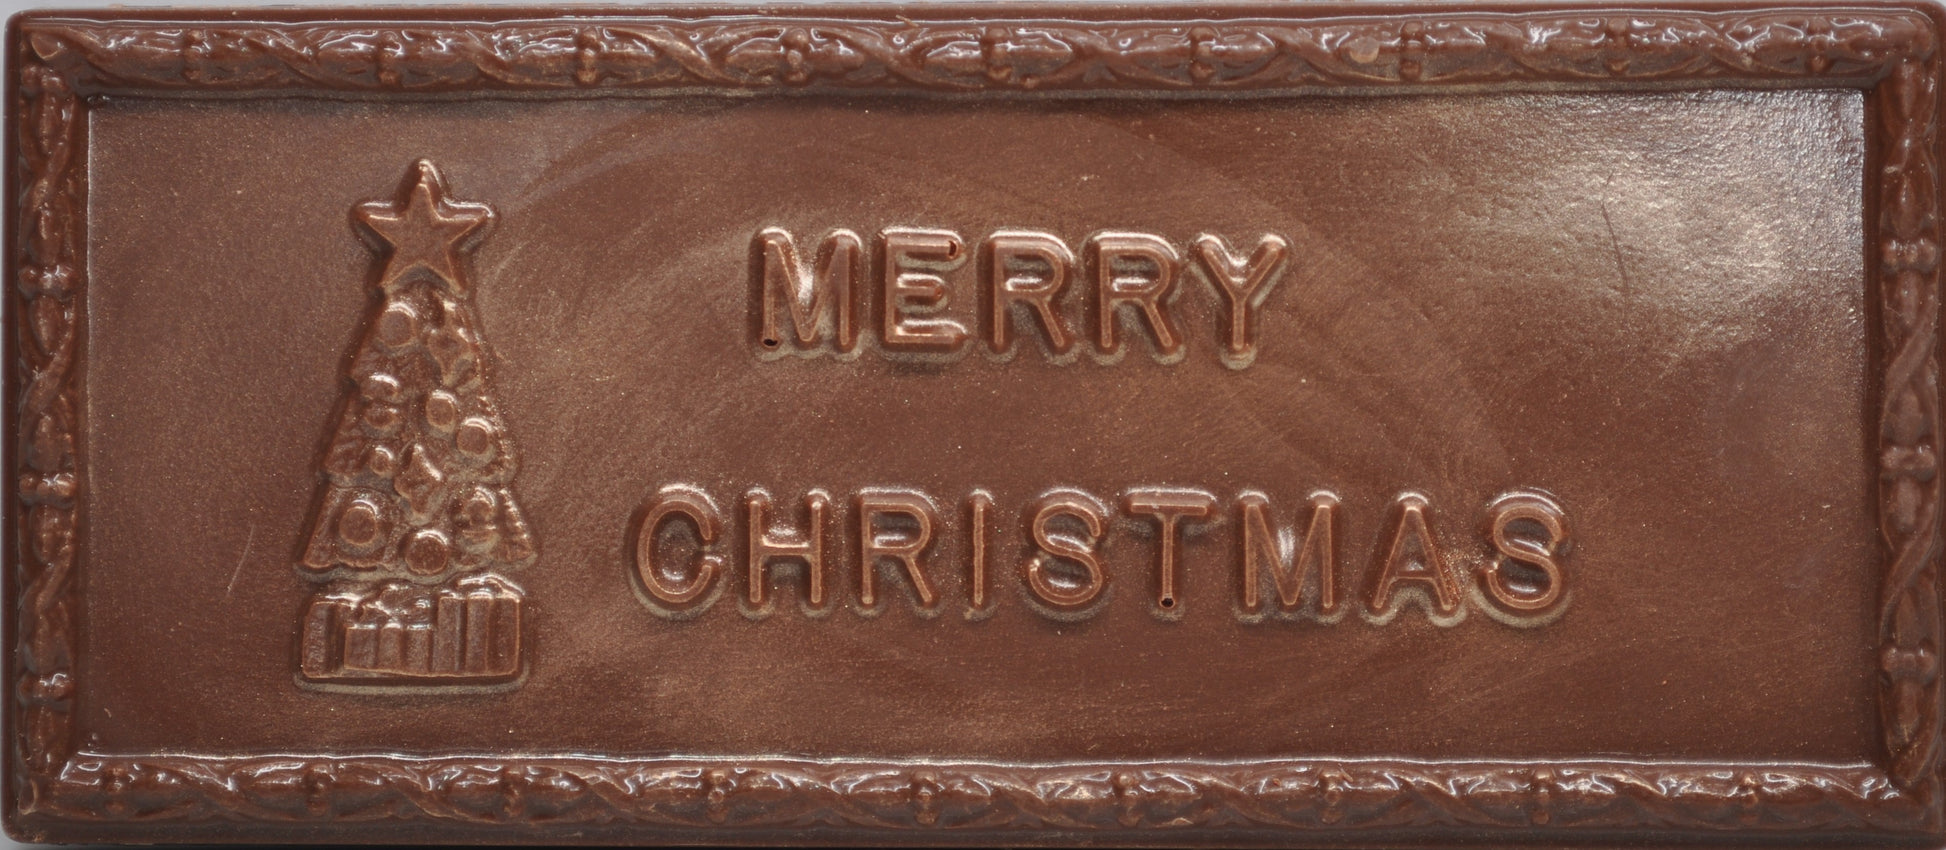 Merry Christmas Bar - Peppermint & Milk Chocolate